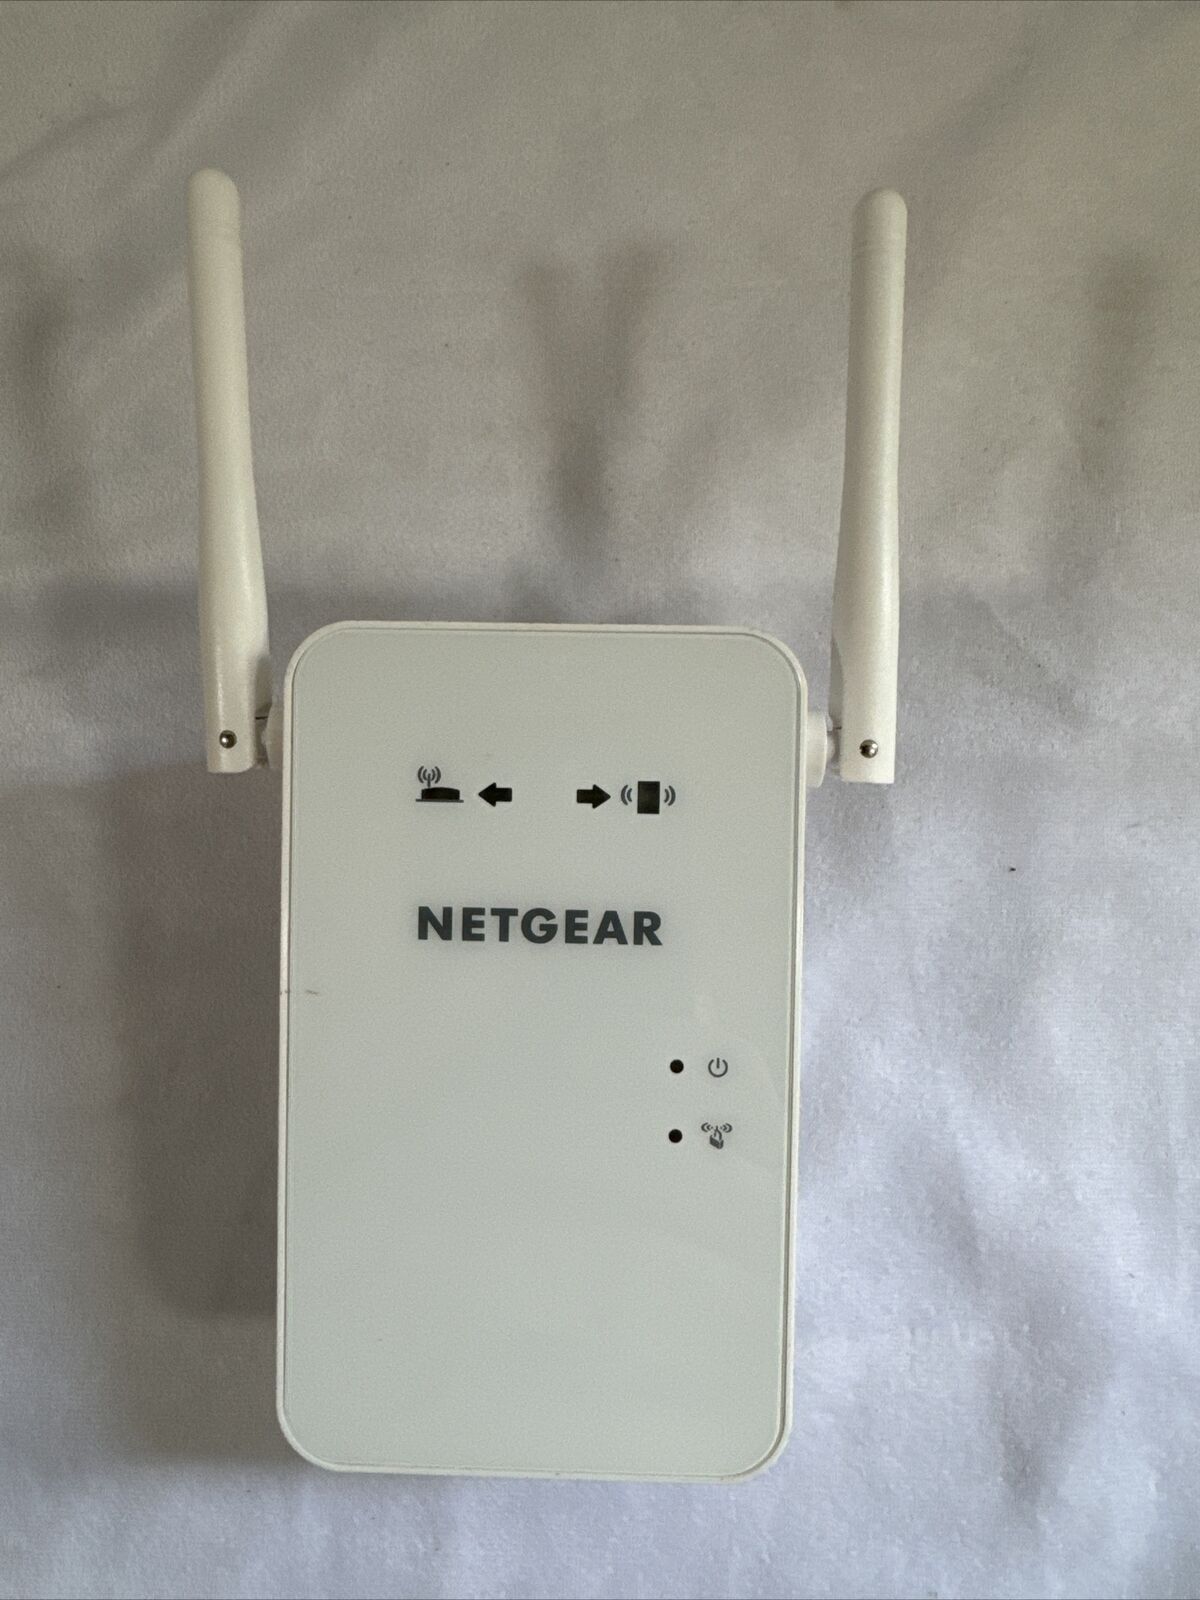 NETGEAR EX6100v2 Dual Band Gigabit AC750 Wi-Fi Range Extender WHITE Tested